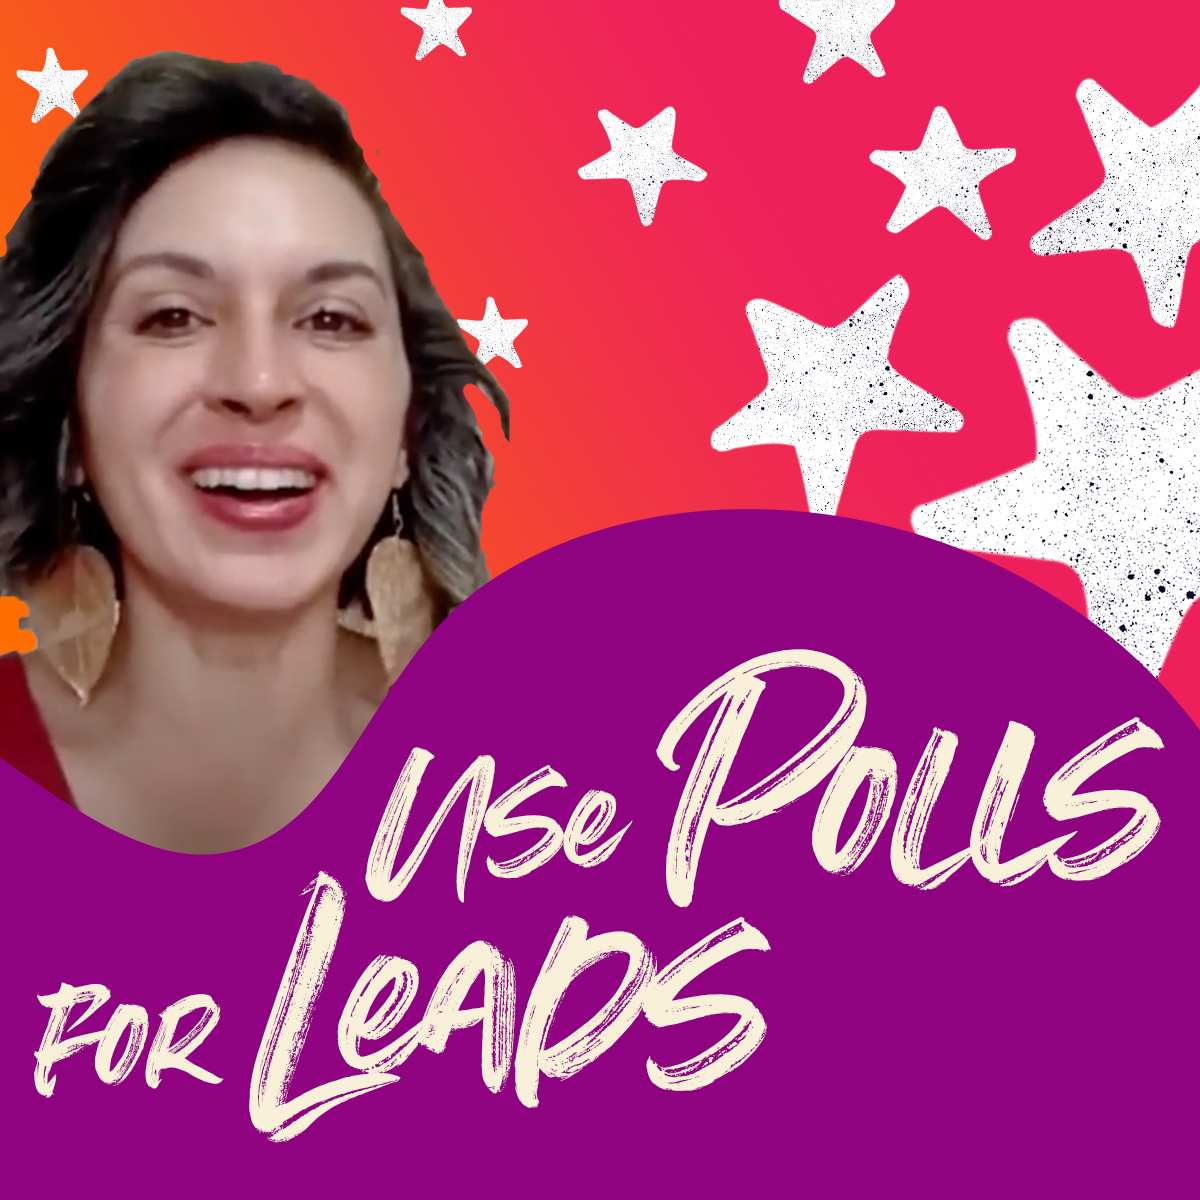 do_linkedin_polls_work_for_getting_leads